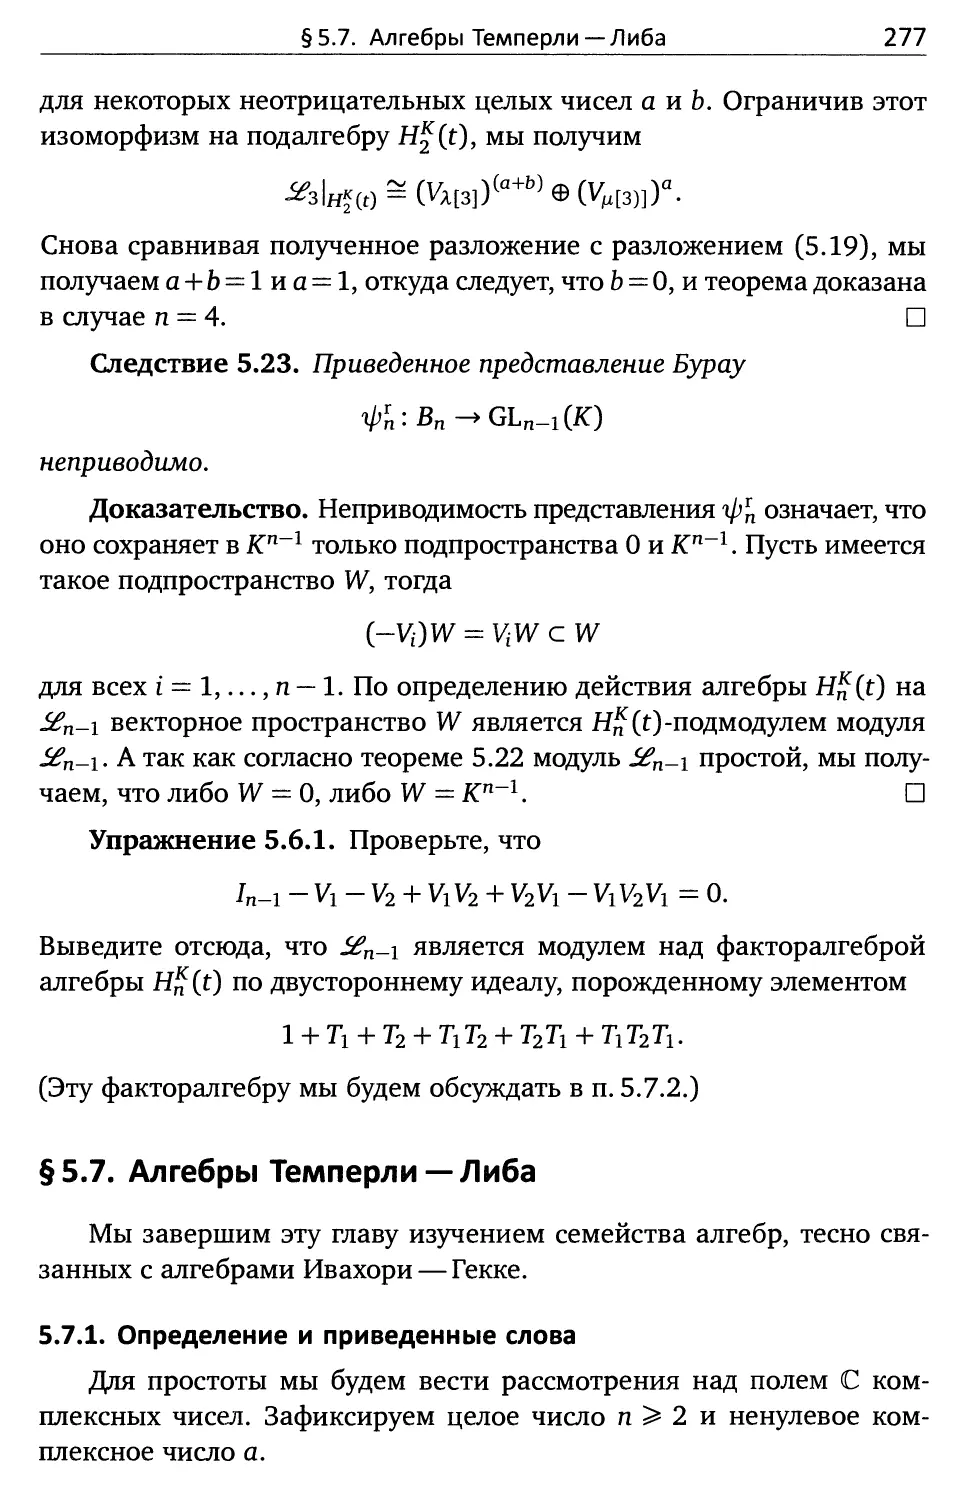 § 5.7. Алгебры Темперли — Либа